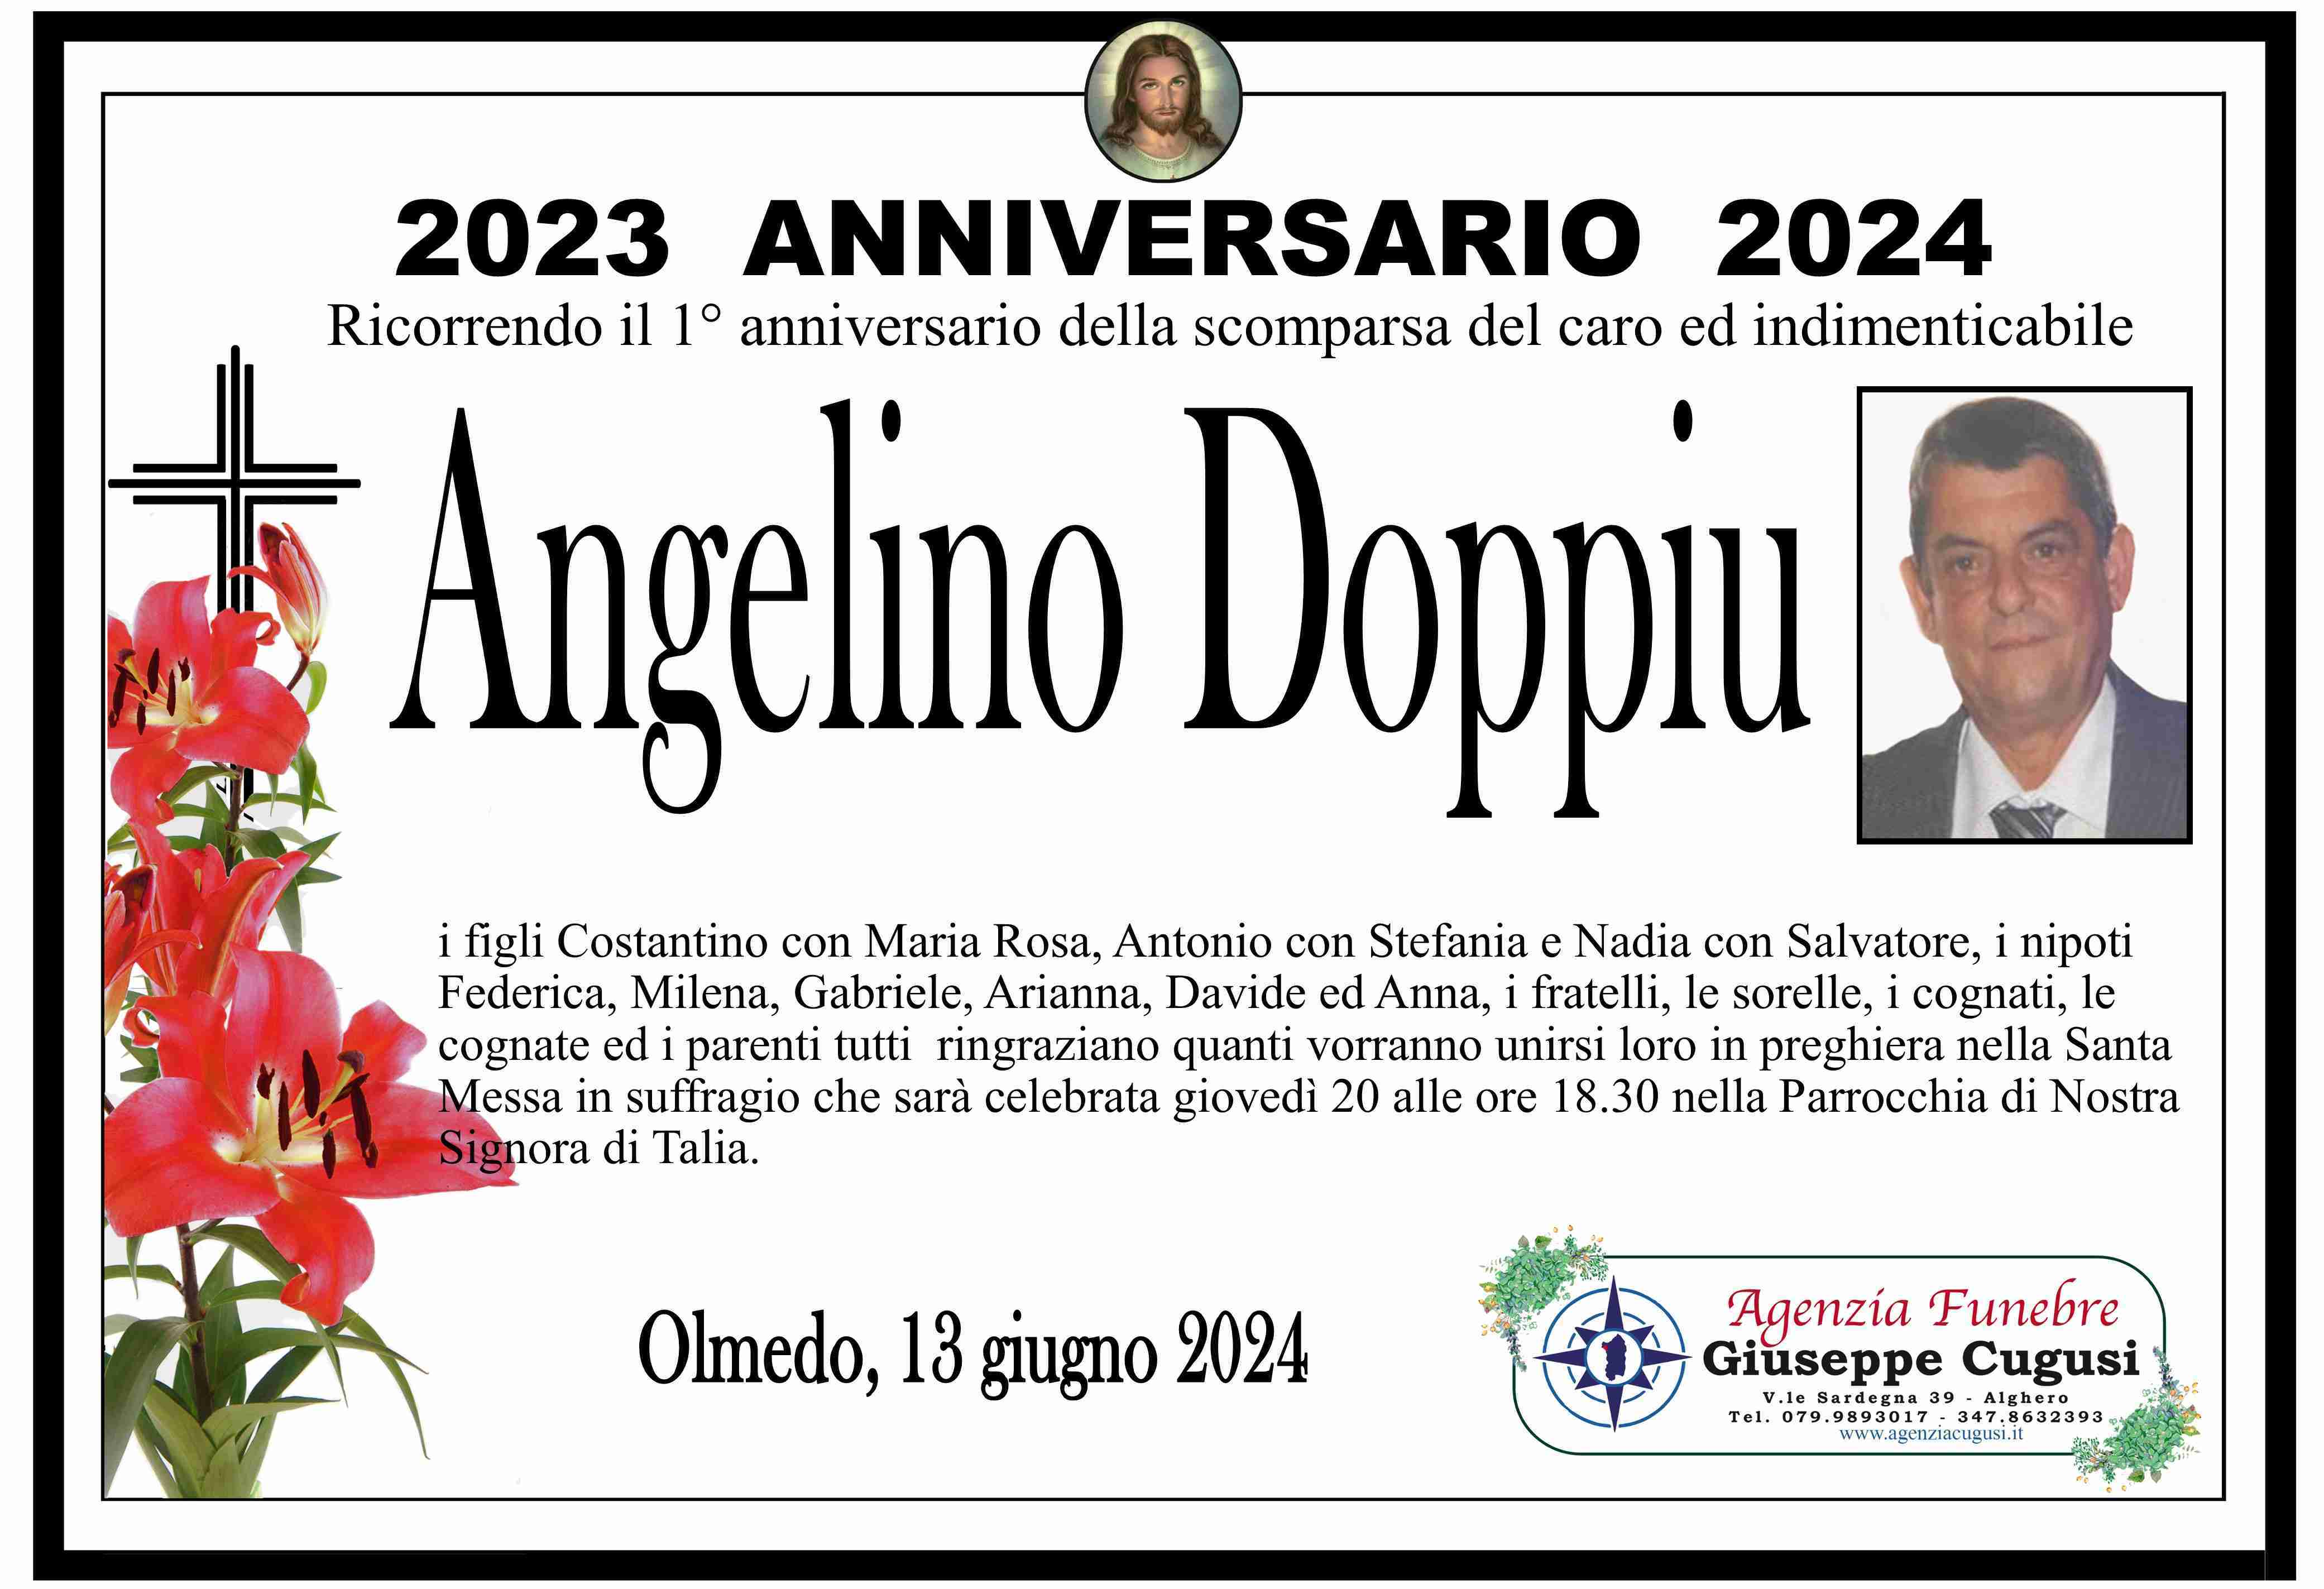 Angelino Doppiu